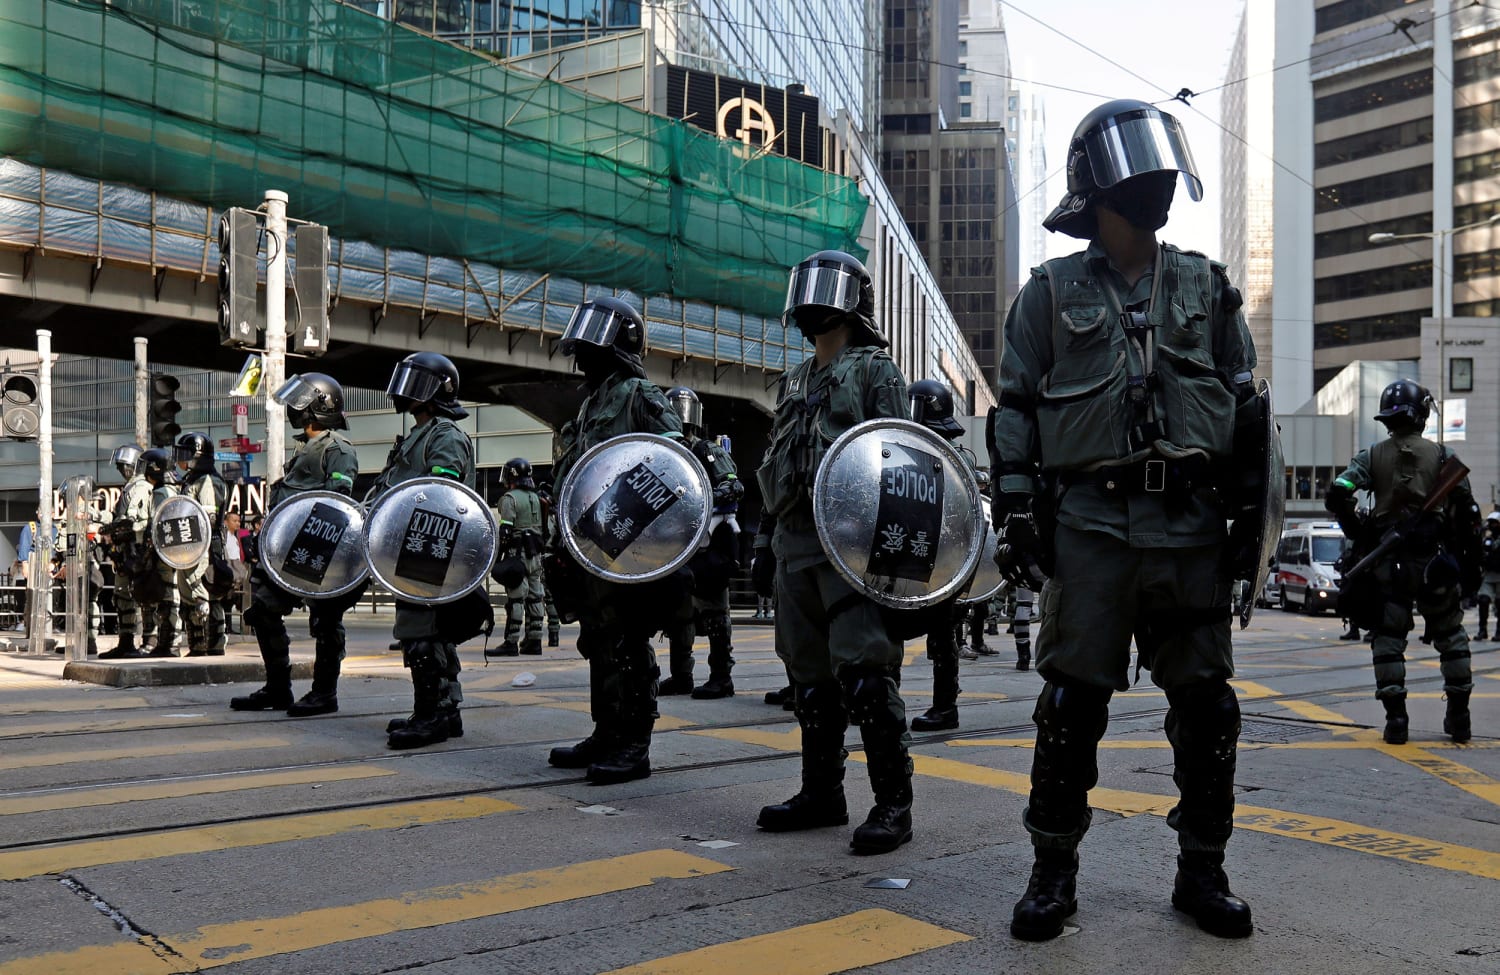 China's Xi calls Hong Kong unrest 'urgent' in rare comment ...